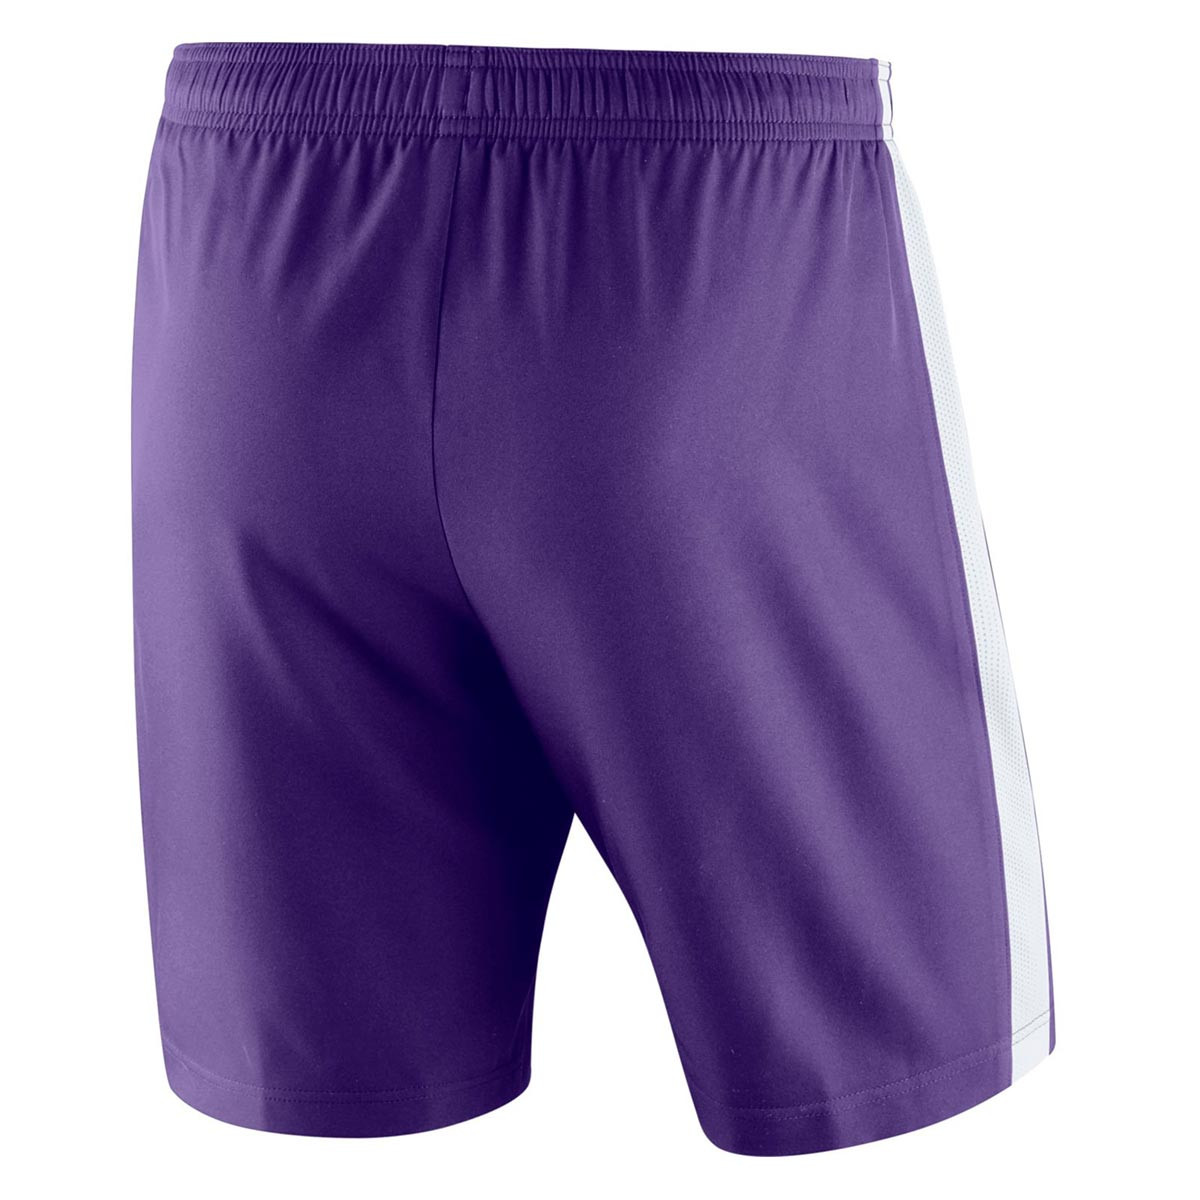 purple shorts nike